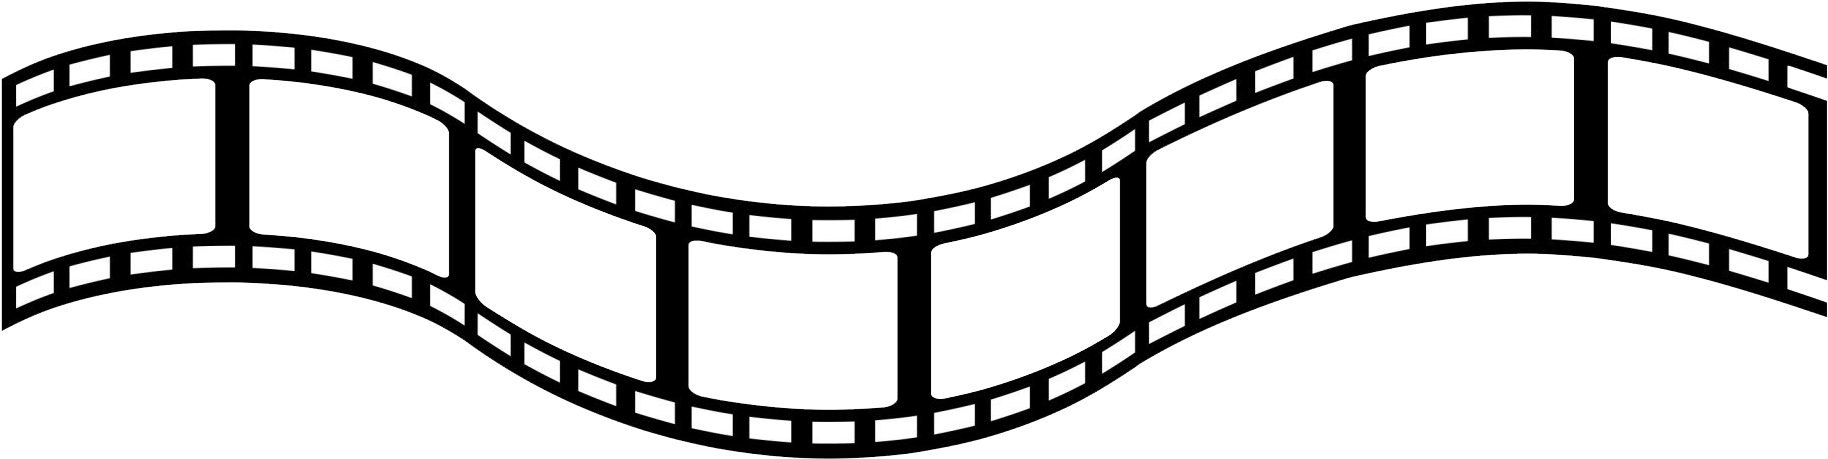 A Black And White Film Strip